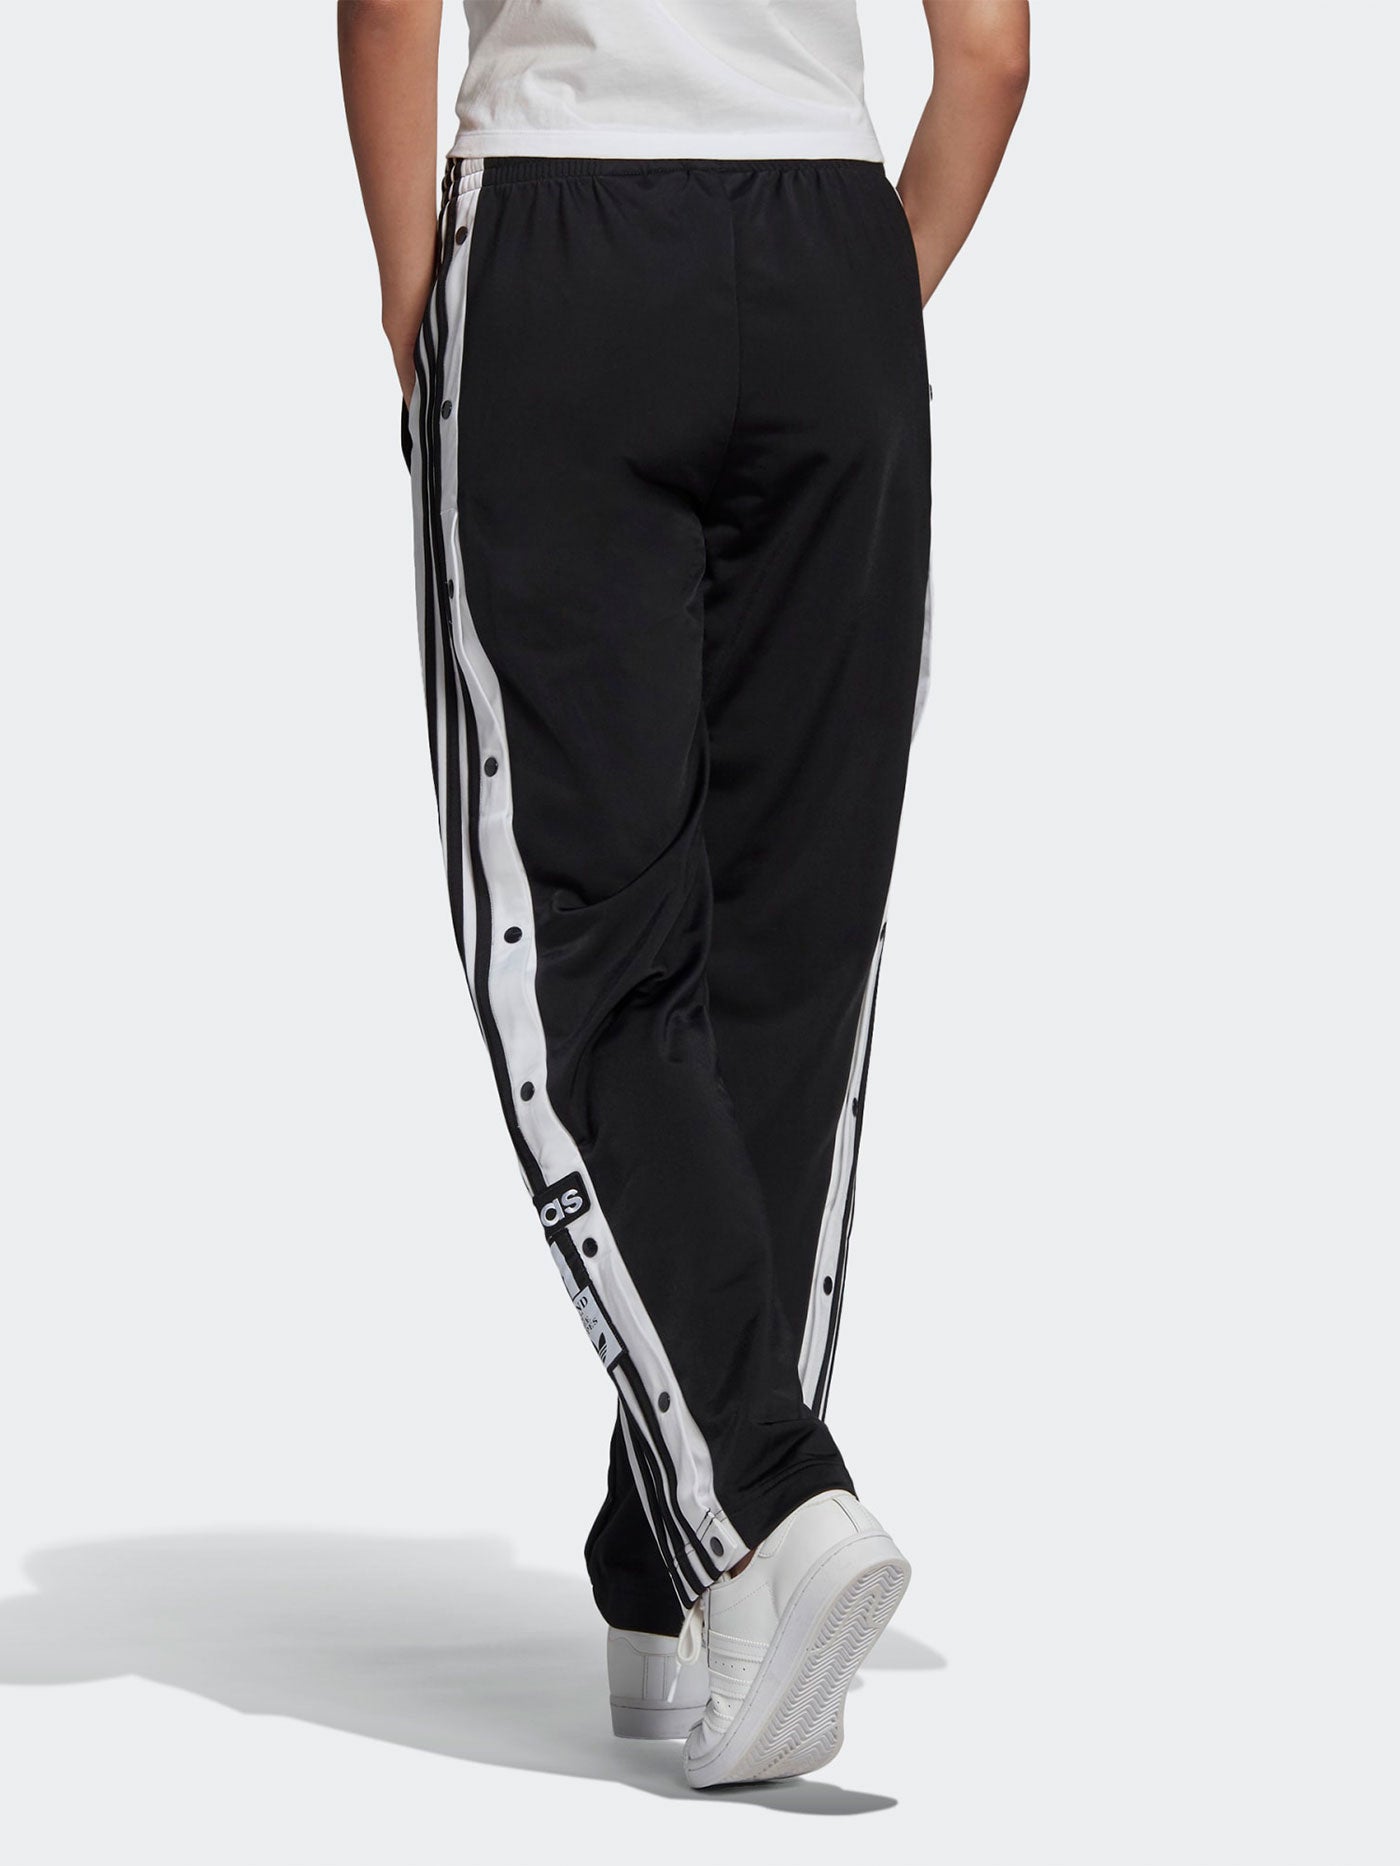 adidas Originals Black Og Adibreak Track Pants | Lyst